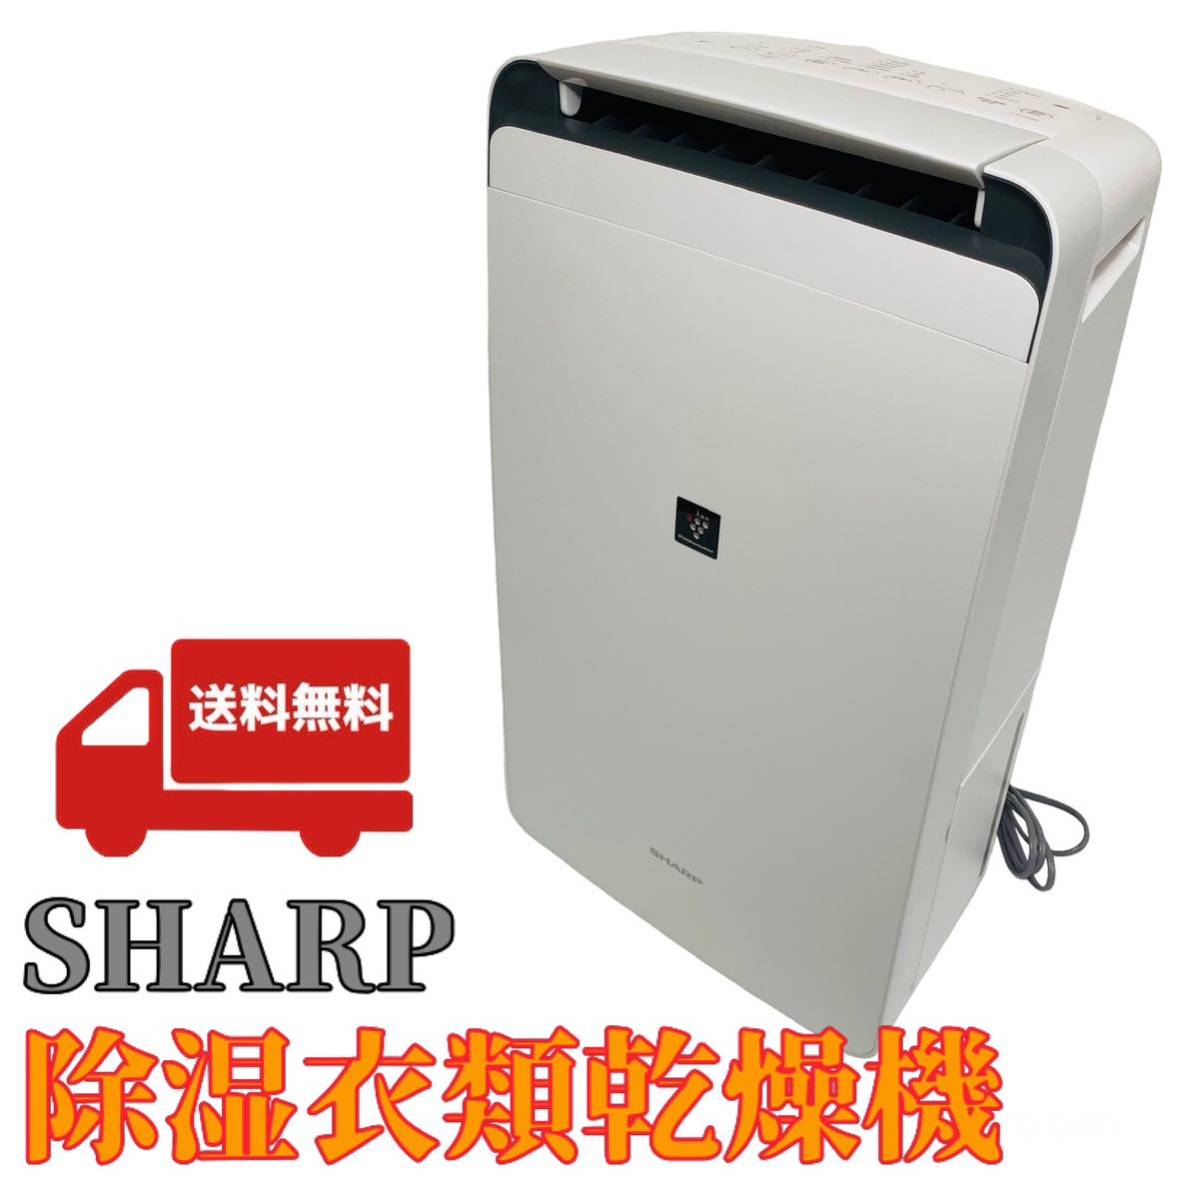 SHARP シャープ 除湿機 衣類乾燥機 CV-J120 neuroid.uprrp.edu